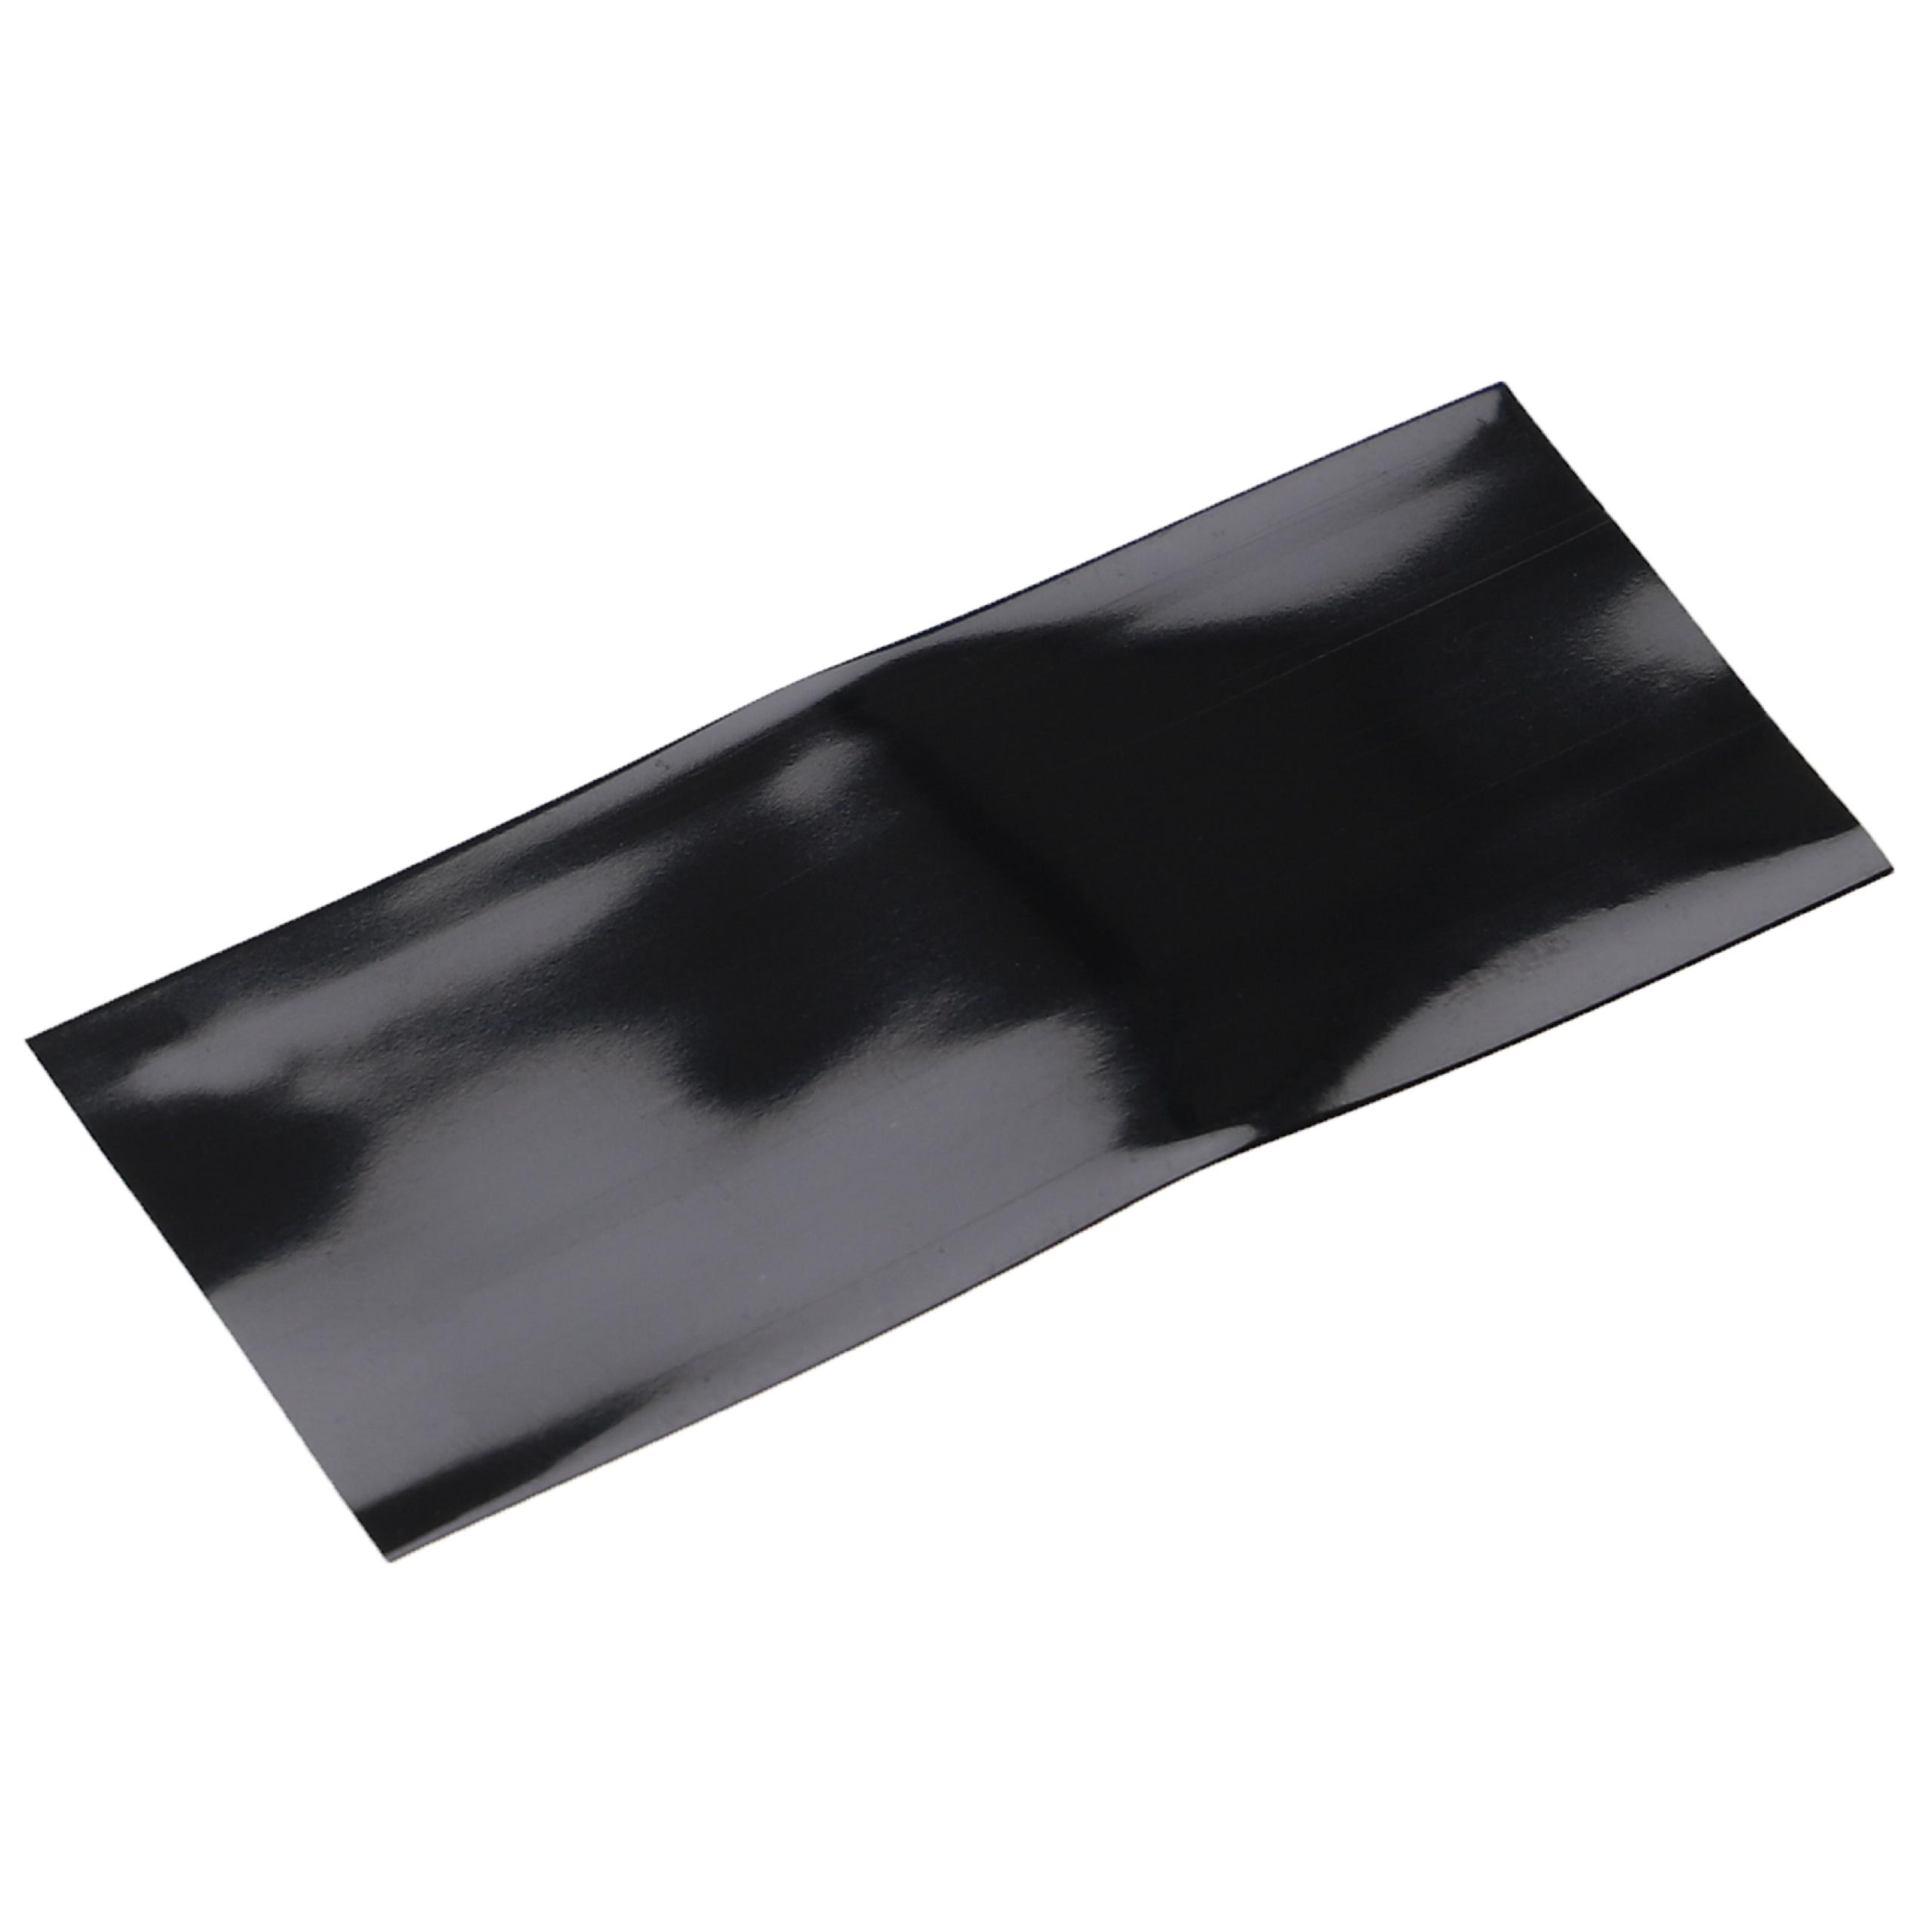 10x Heat Shrink Tubing Suitable for 18650 Battery Cells - Shrink Wrap Black